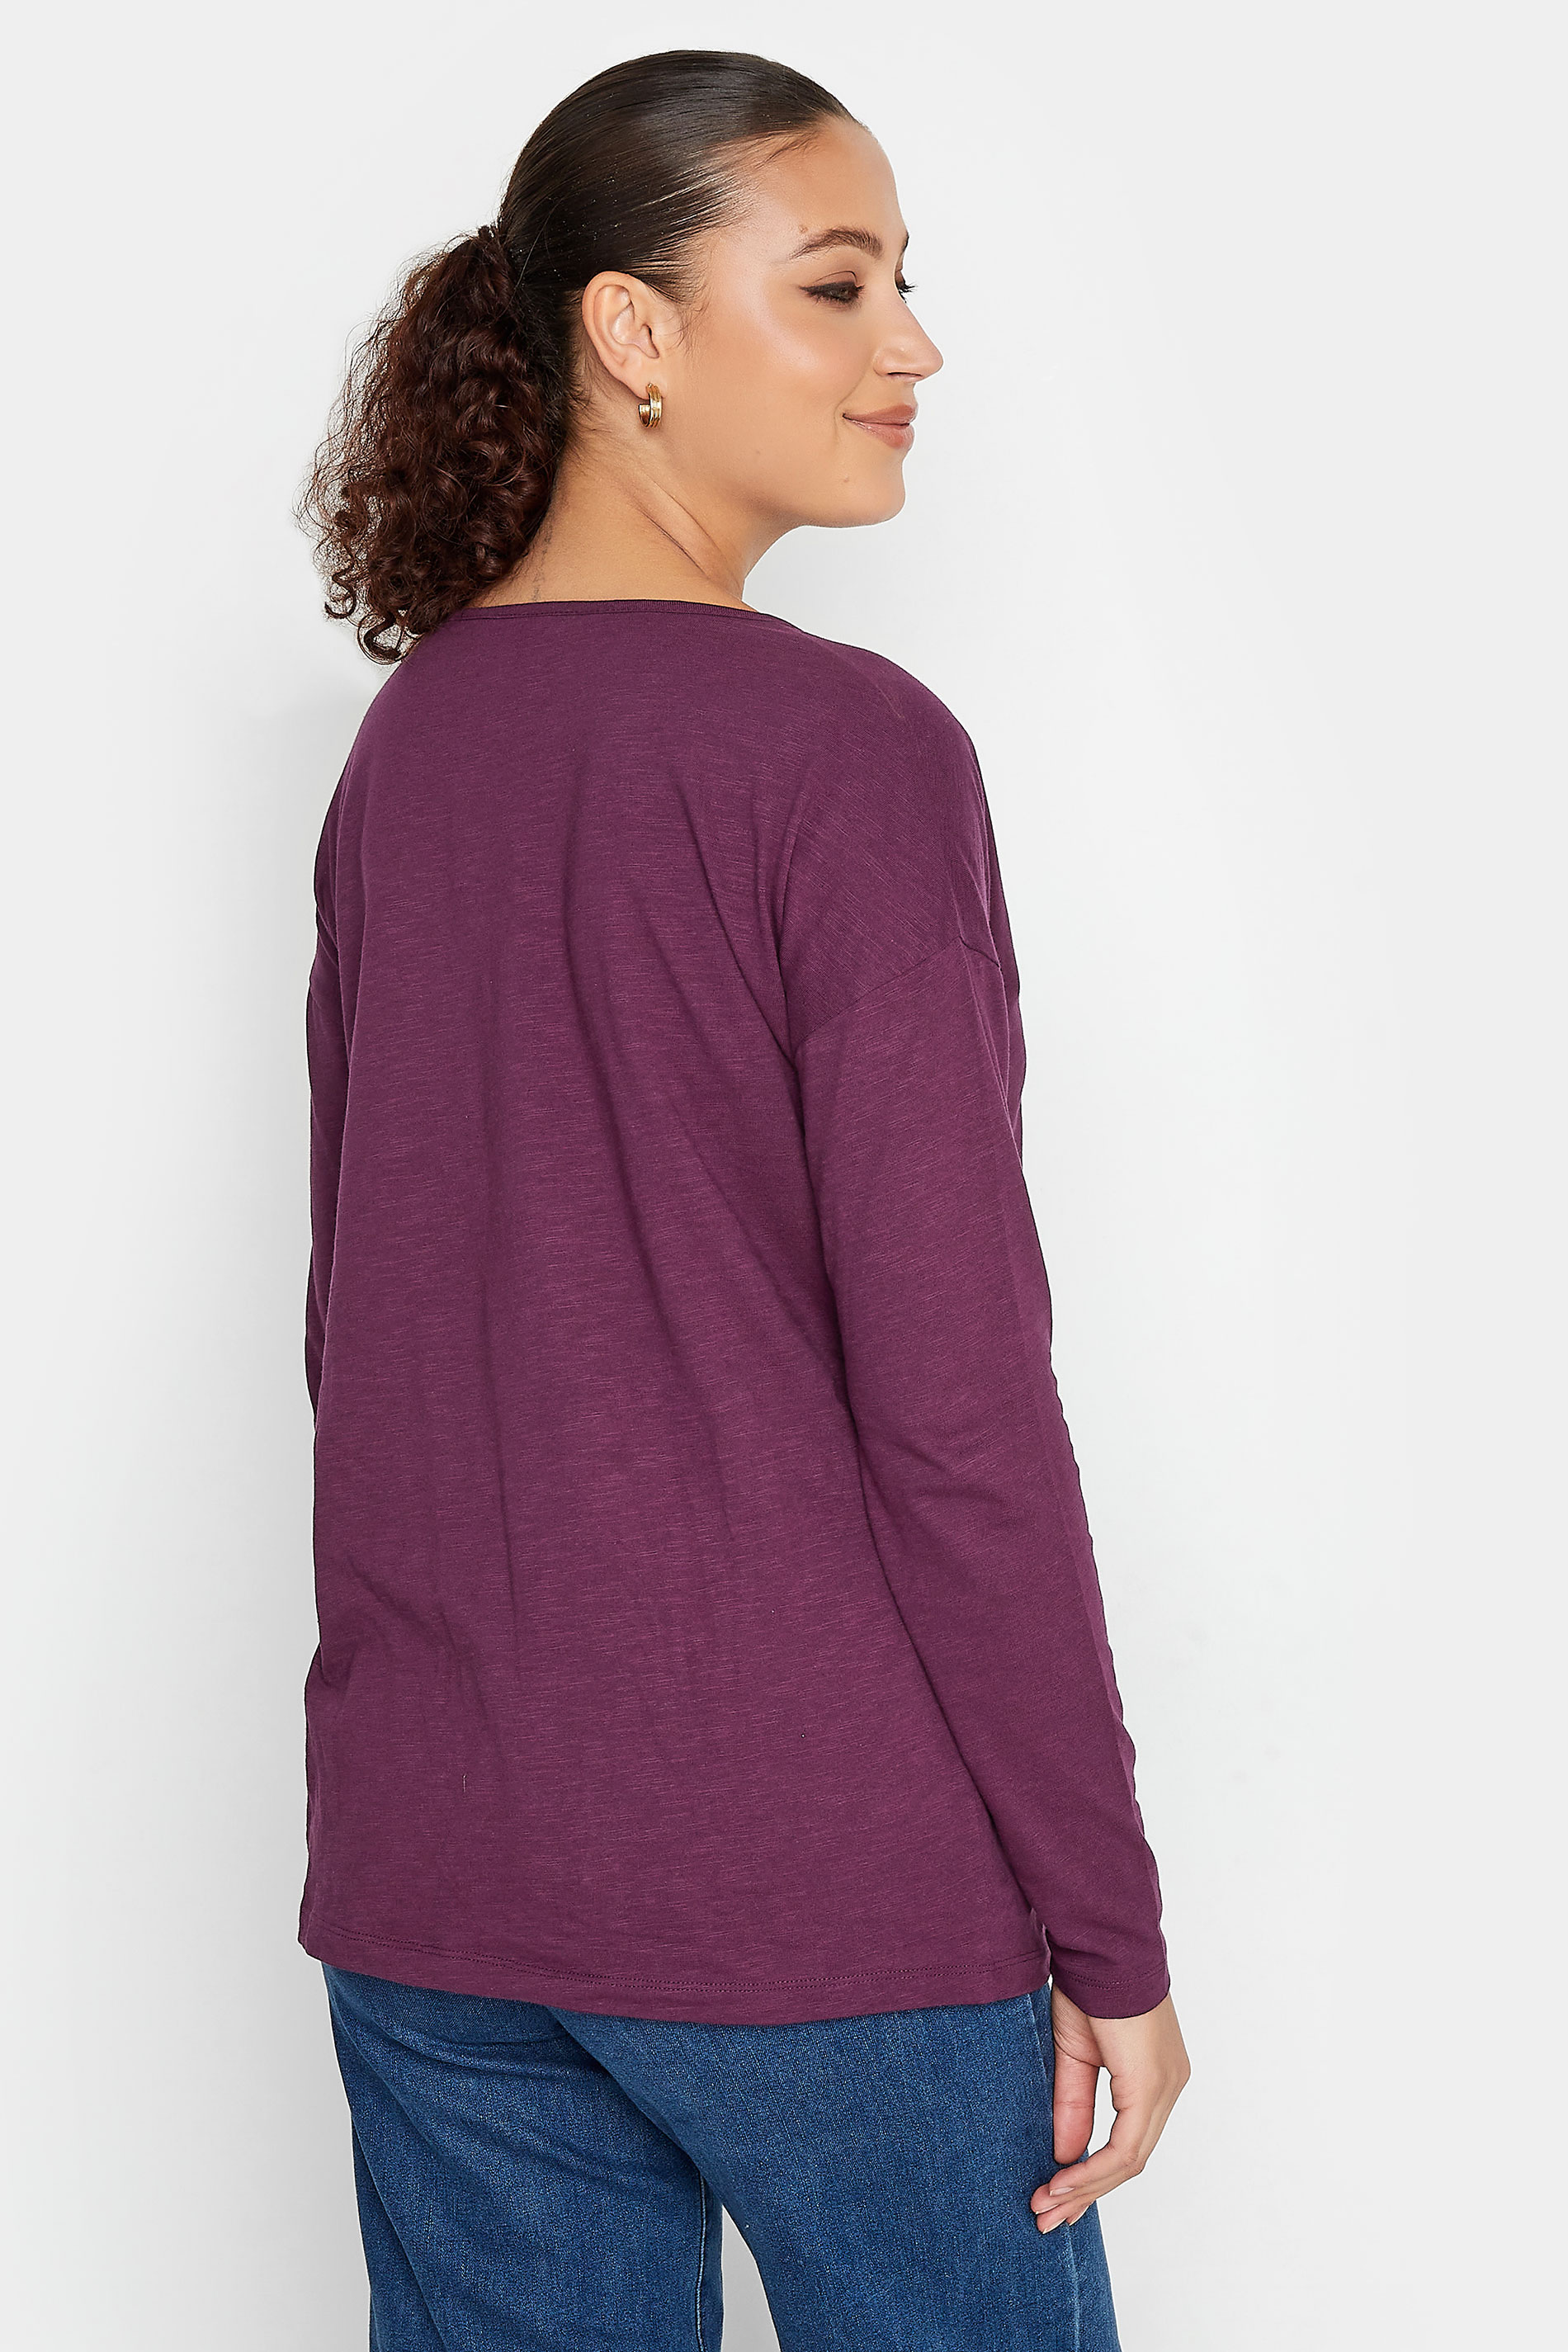 LTS Tall Purple V-Neck Long Sleeve Cotton T-Shirt | Long Tall Sally 3